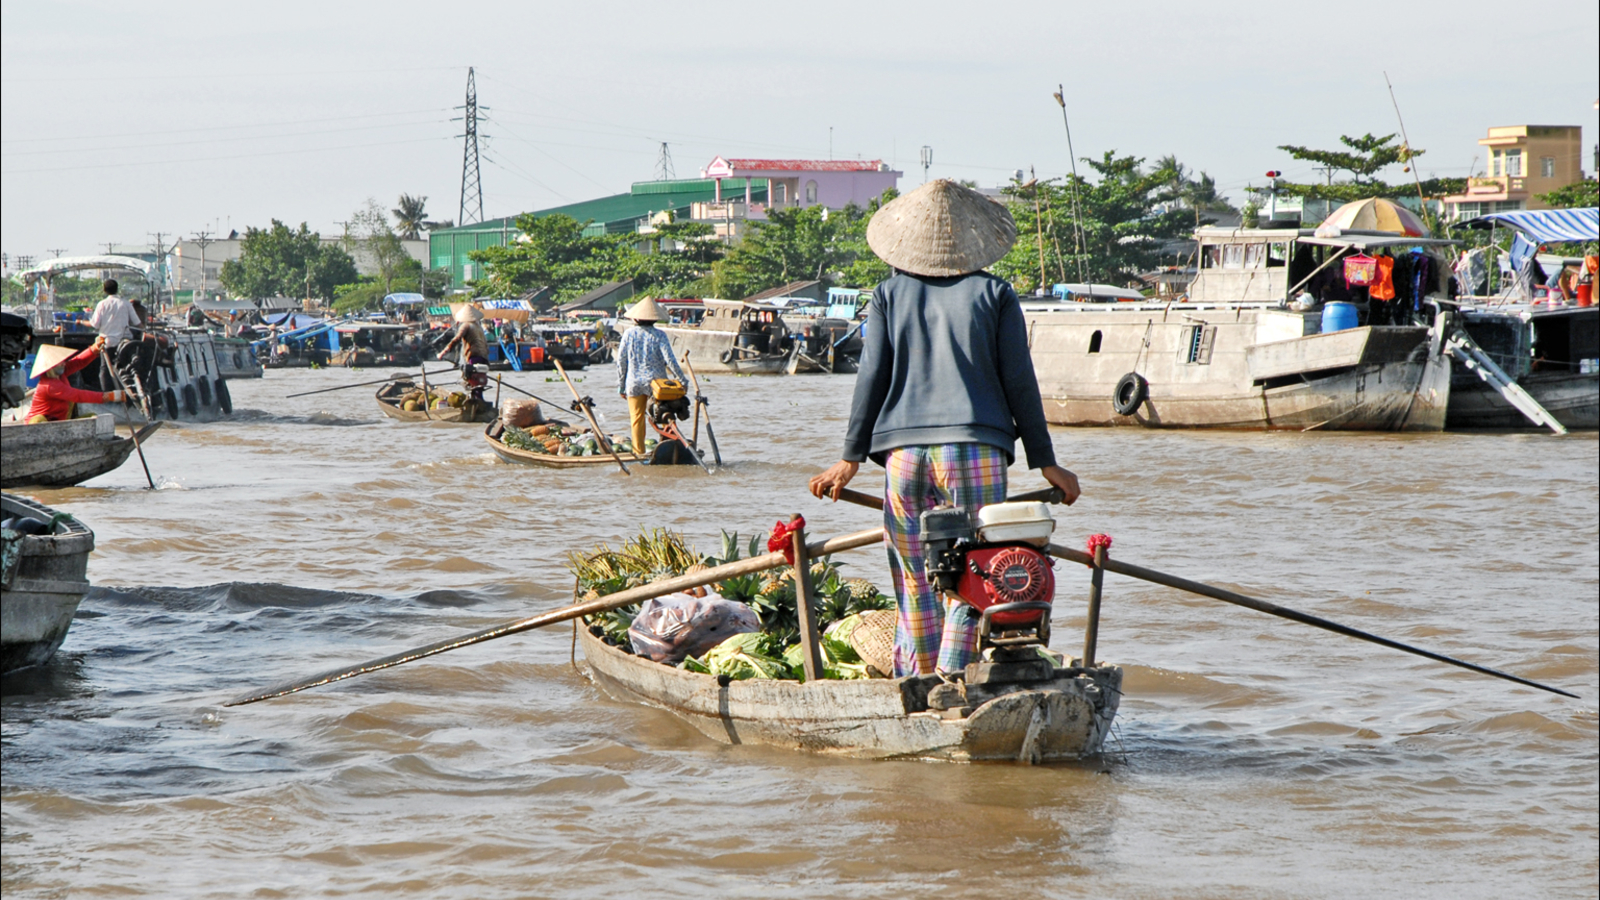 Floating market on the Mekong. Photo: Jean-Pierre Dalbéra, Wikimedia Commons